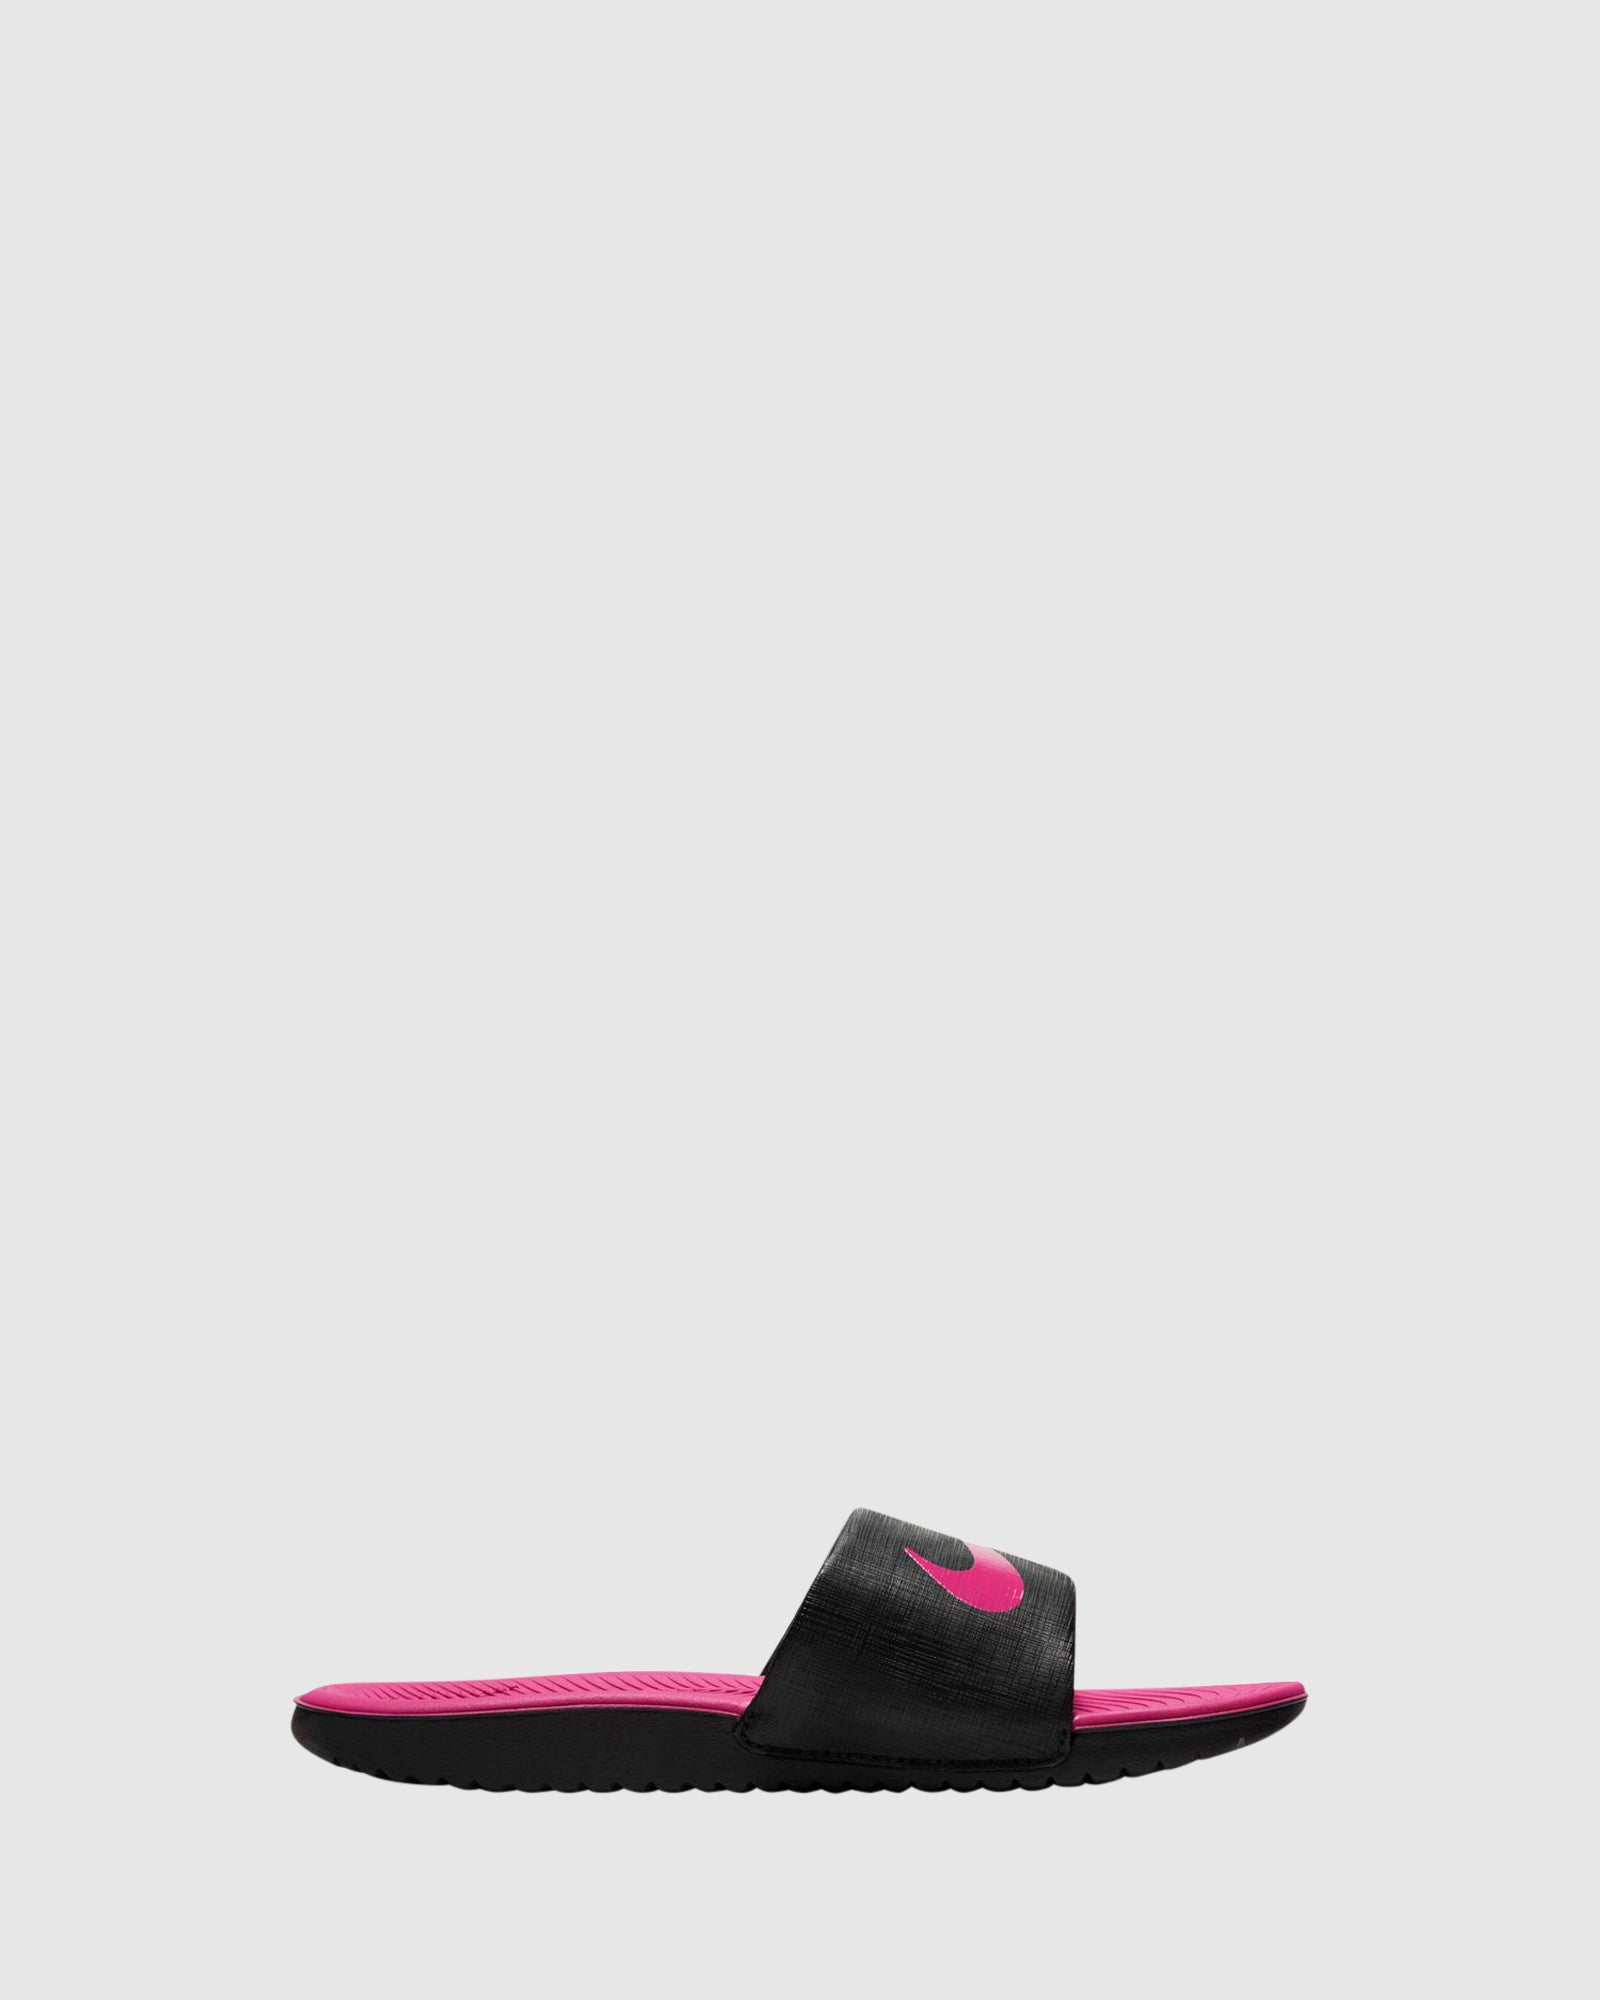 Kawa Slide Black/Vivid Pink